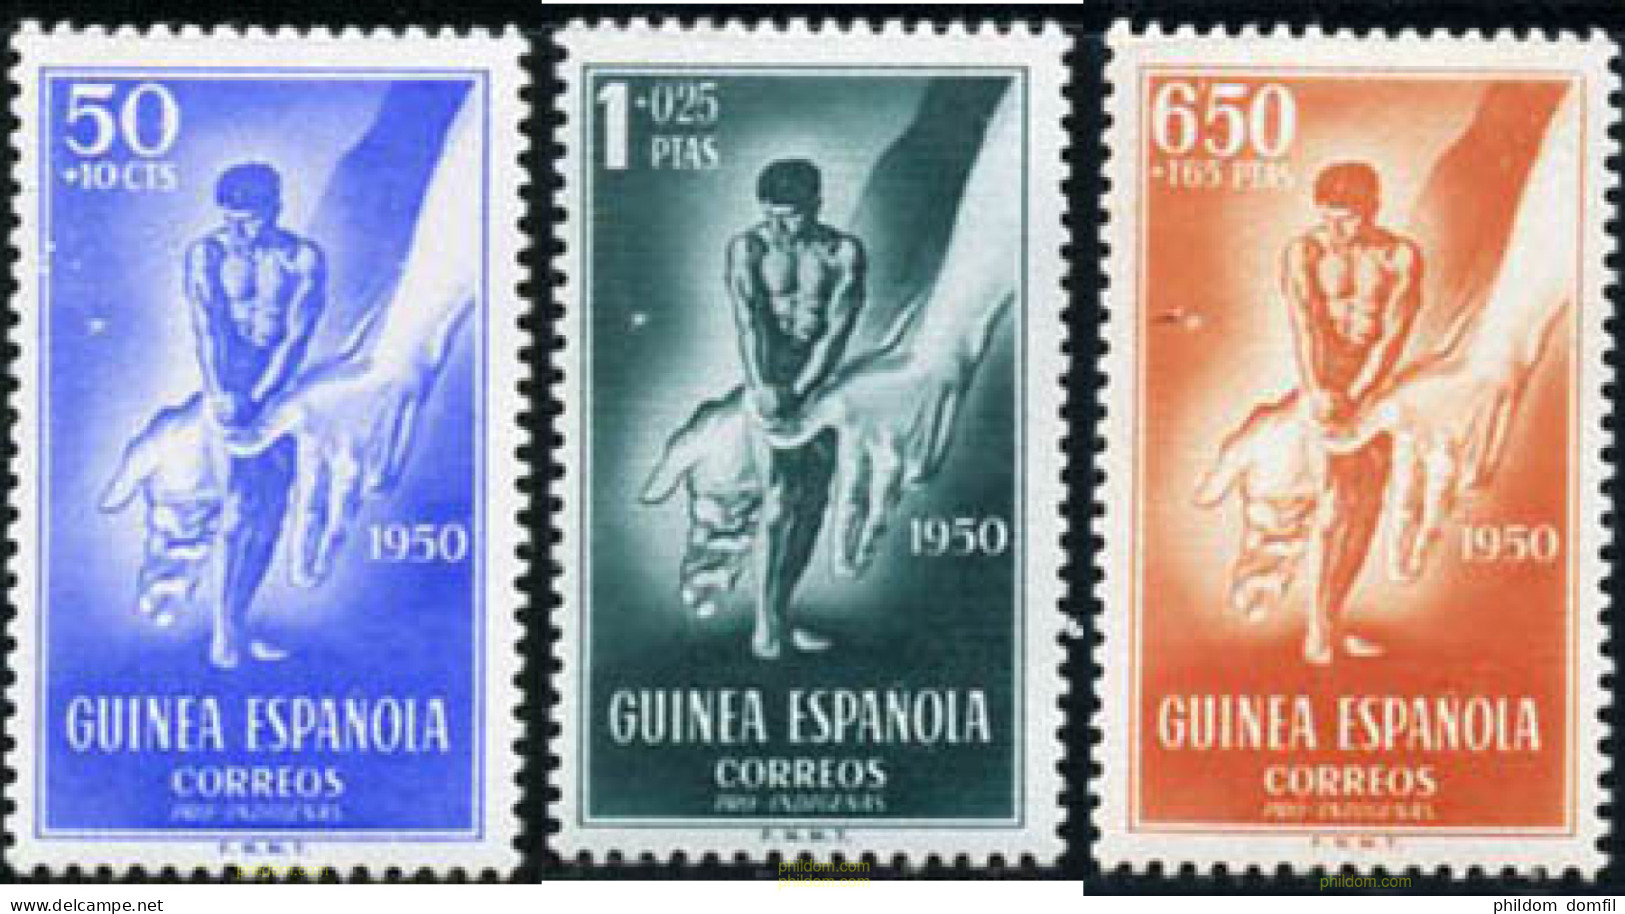 198490 MNH GUINEA ESPAÑOLA 1950 PRO INDIGENAS - Guinea Española